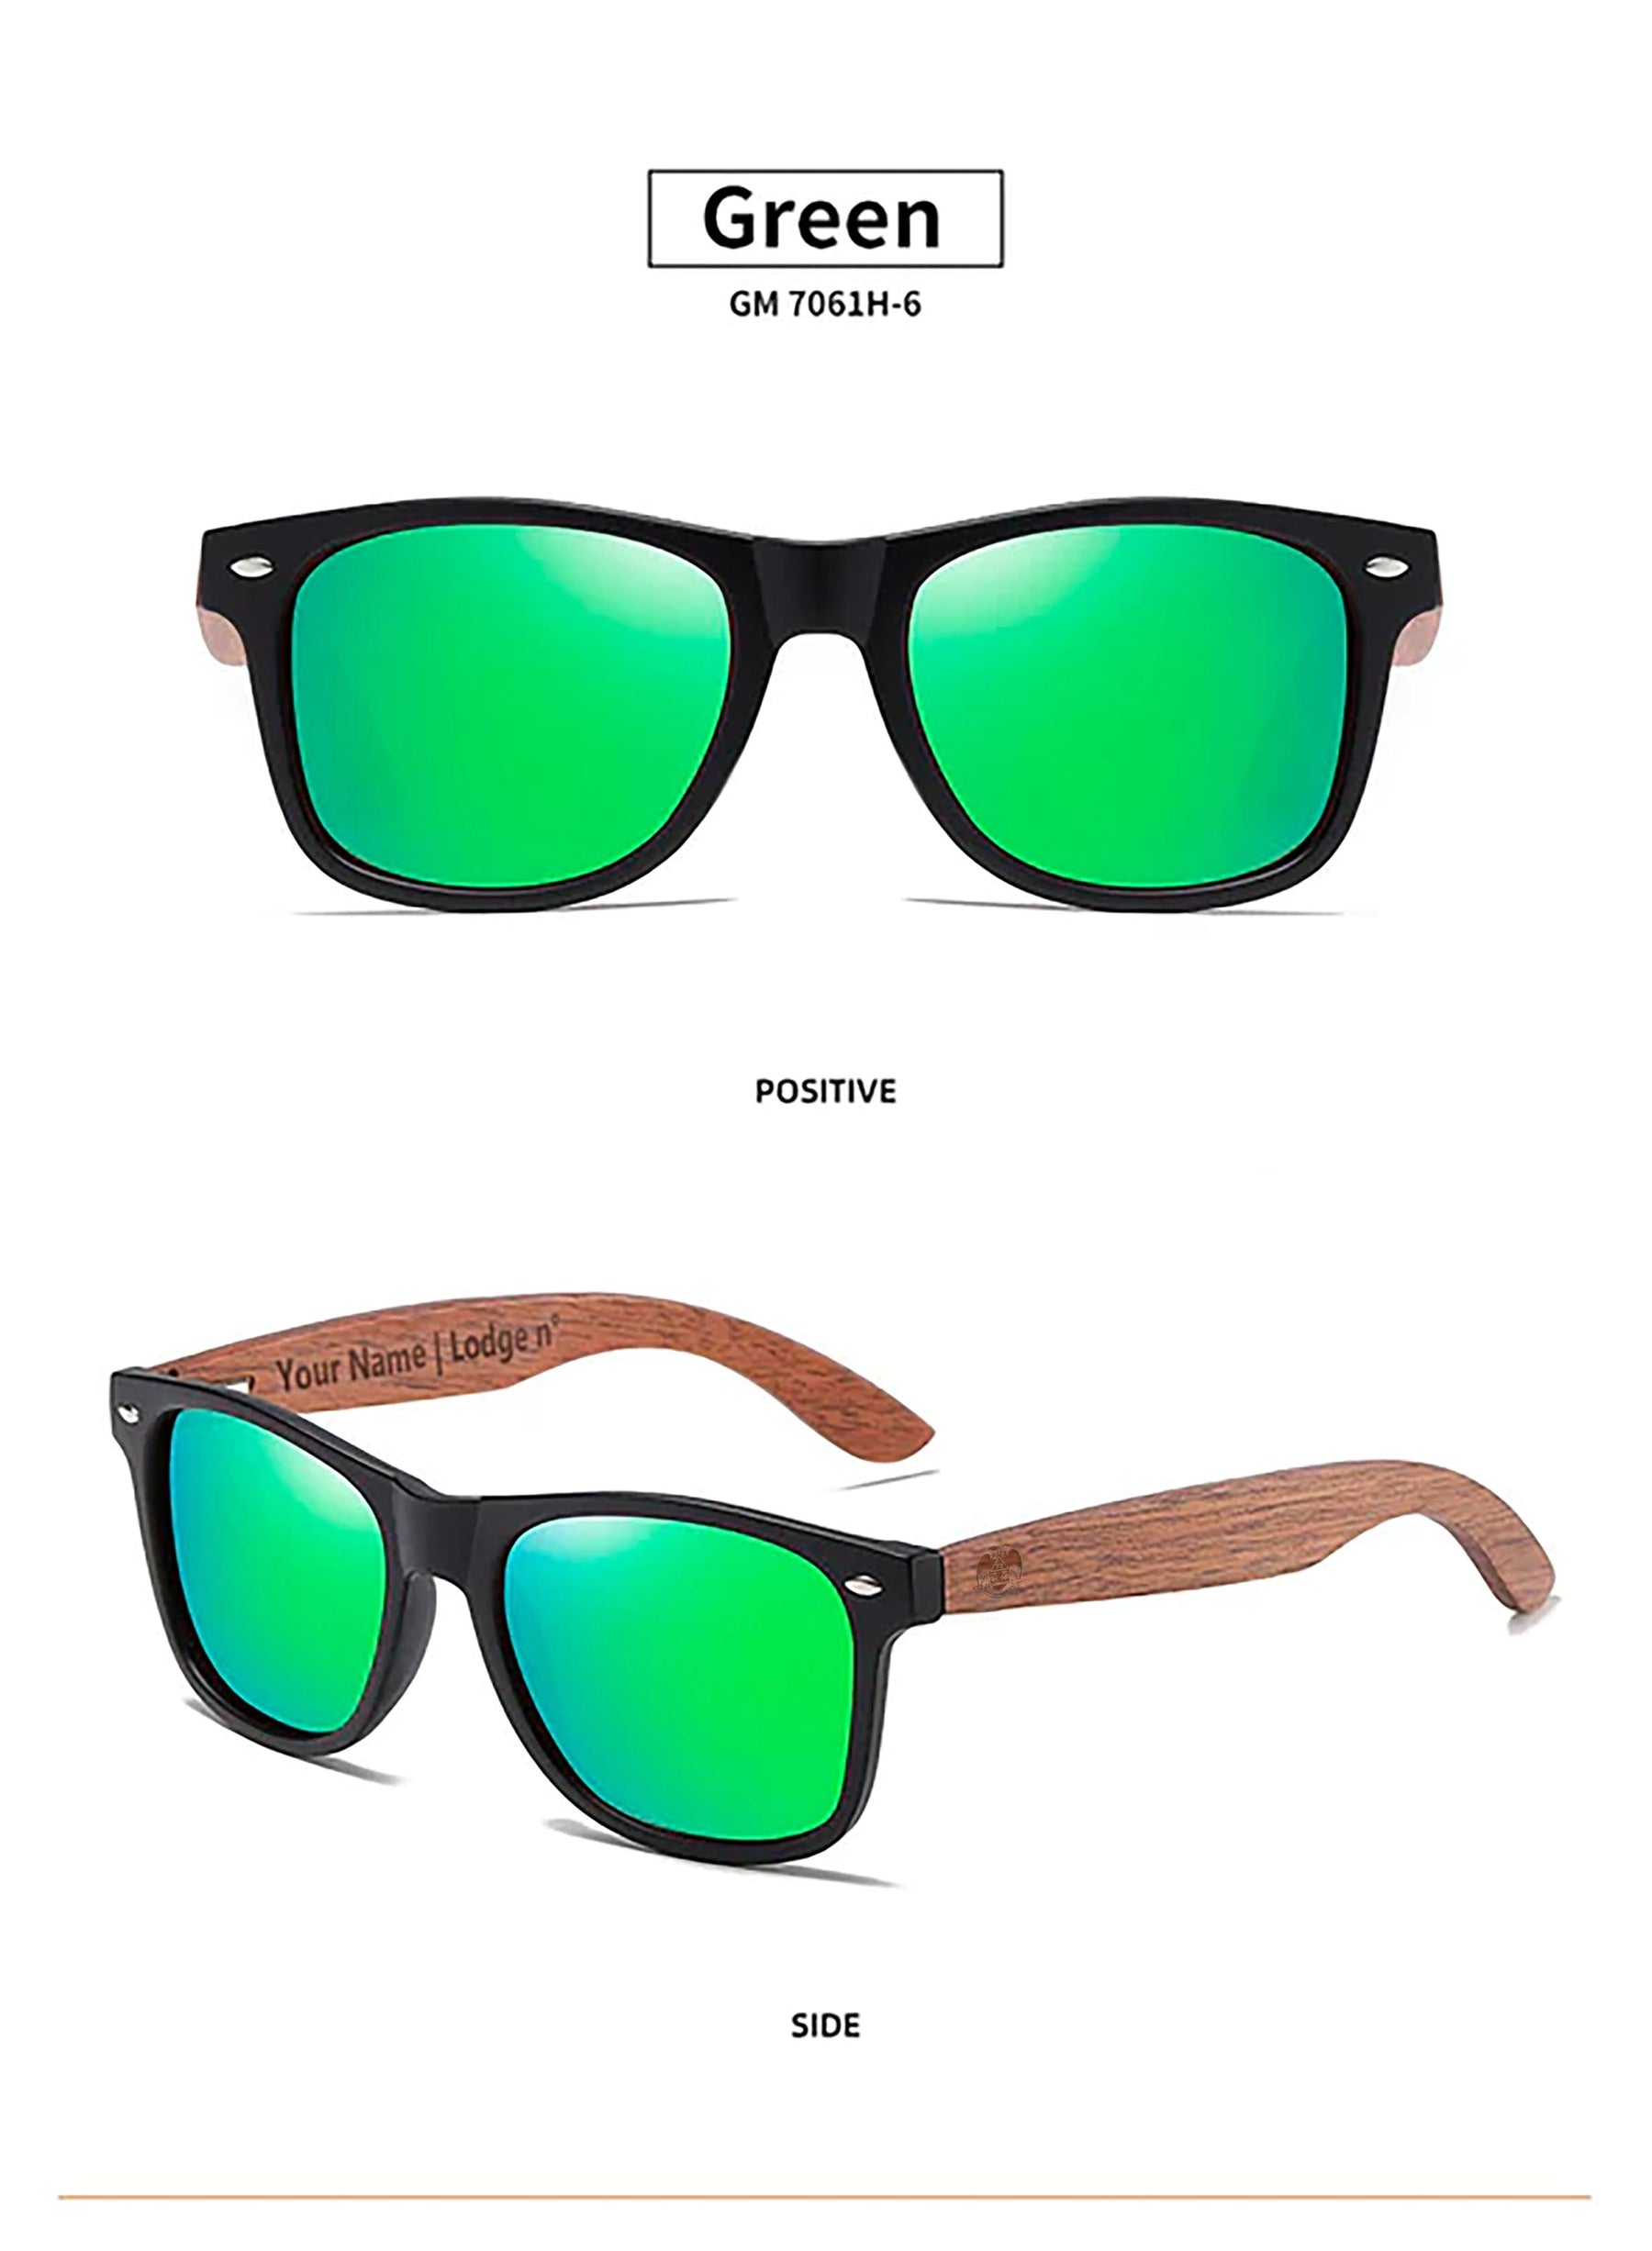 33rd Degree Scottish Rite Sunglasses - Wings Down UV Protection - Bricks Masons